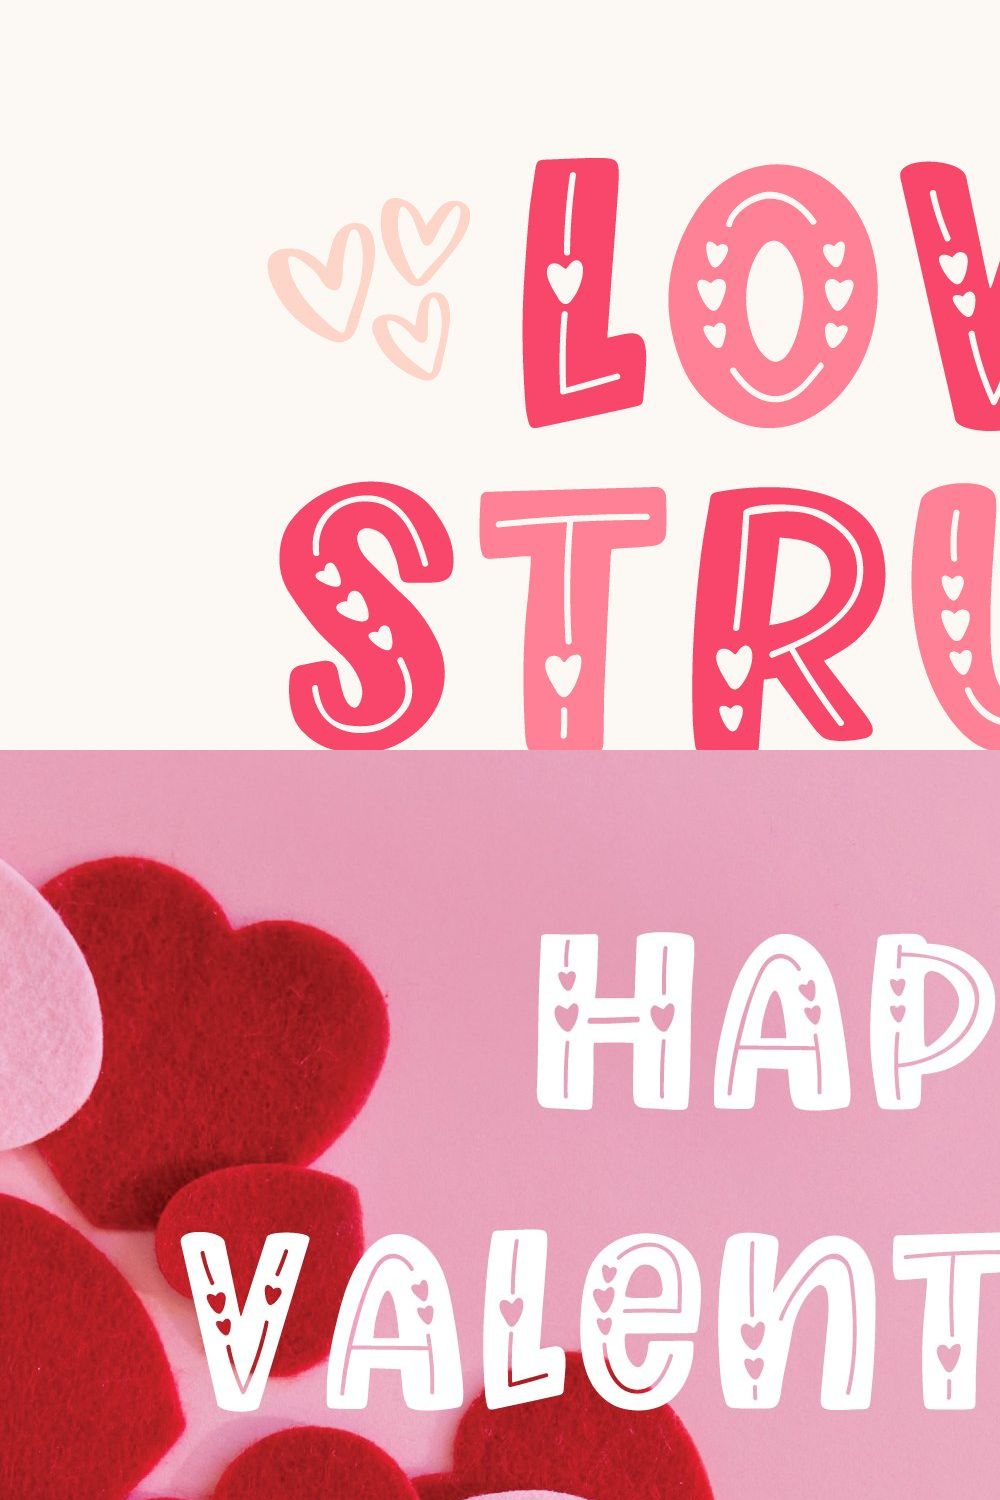 Love Struck, Valentine's Font pinterest preview image.